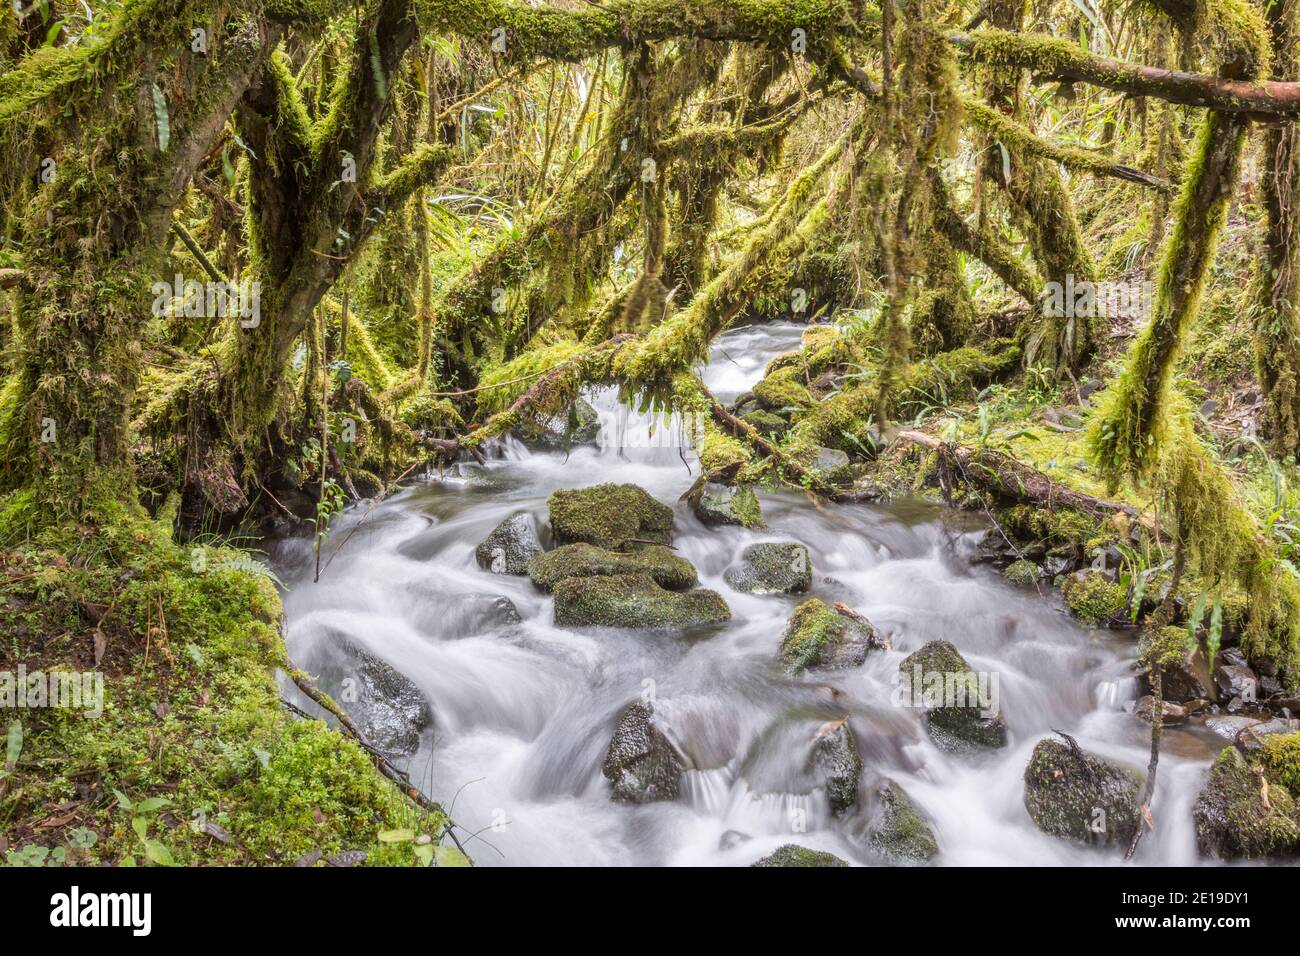 Elfin woodland or high altitude tropical dwarf forest at 4,500m altitude, near Papallacta, Ecuador. Stock Photo